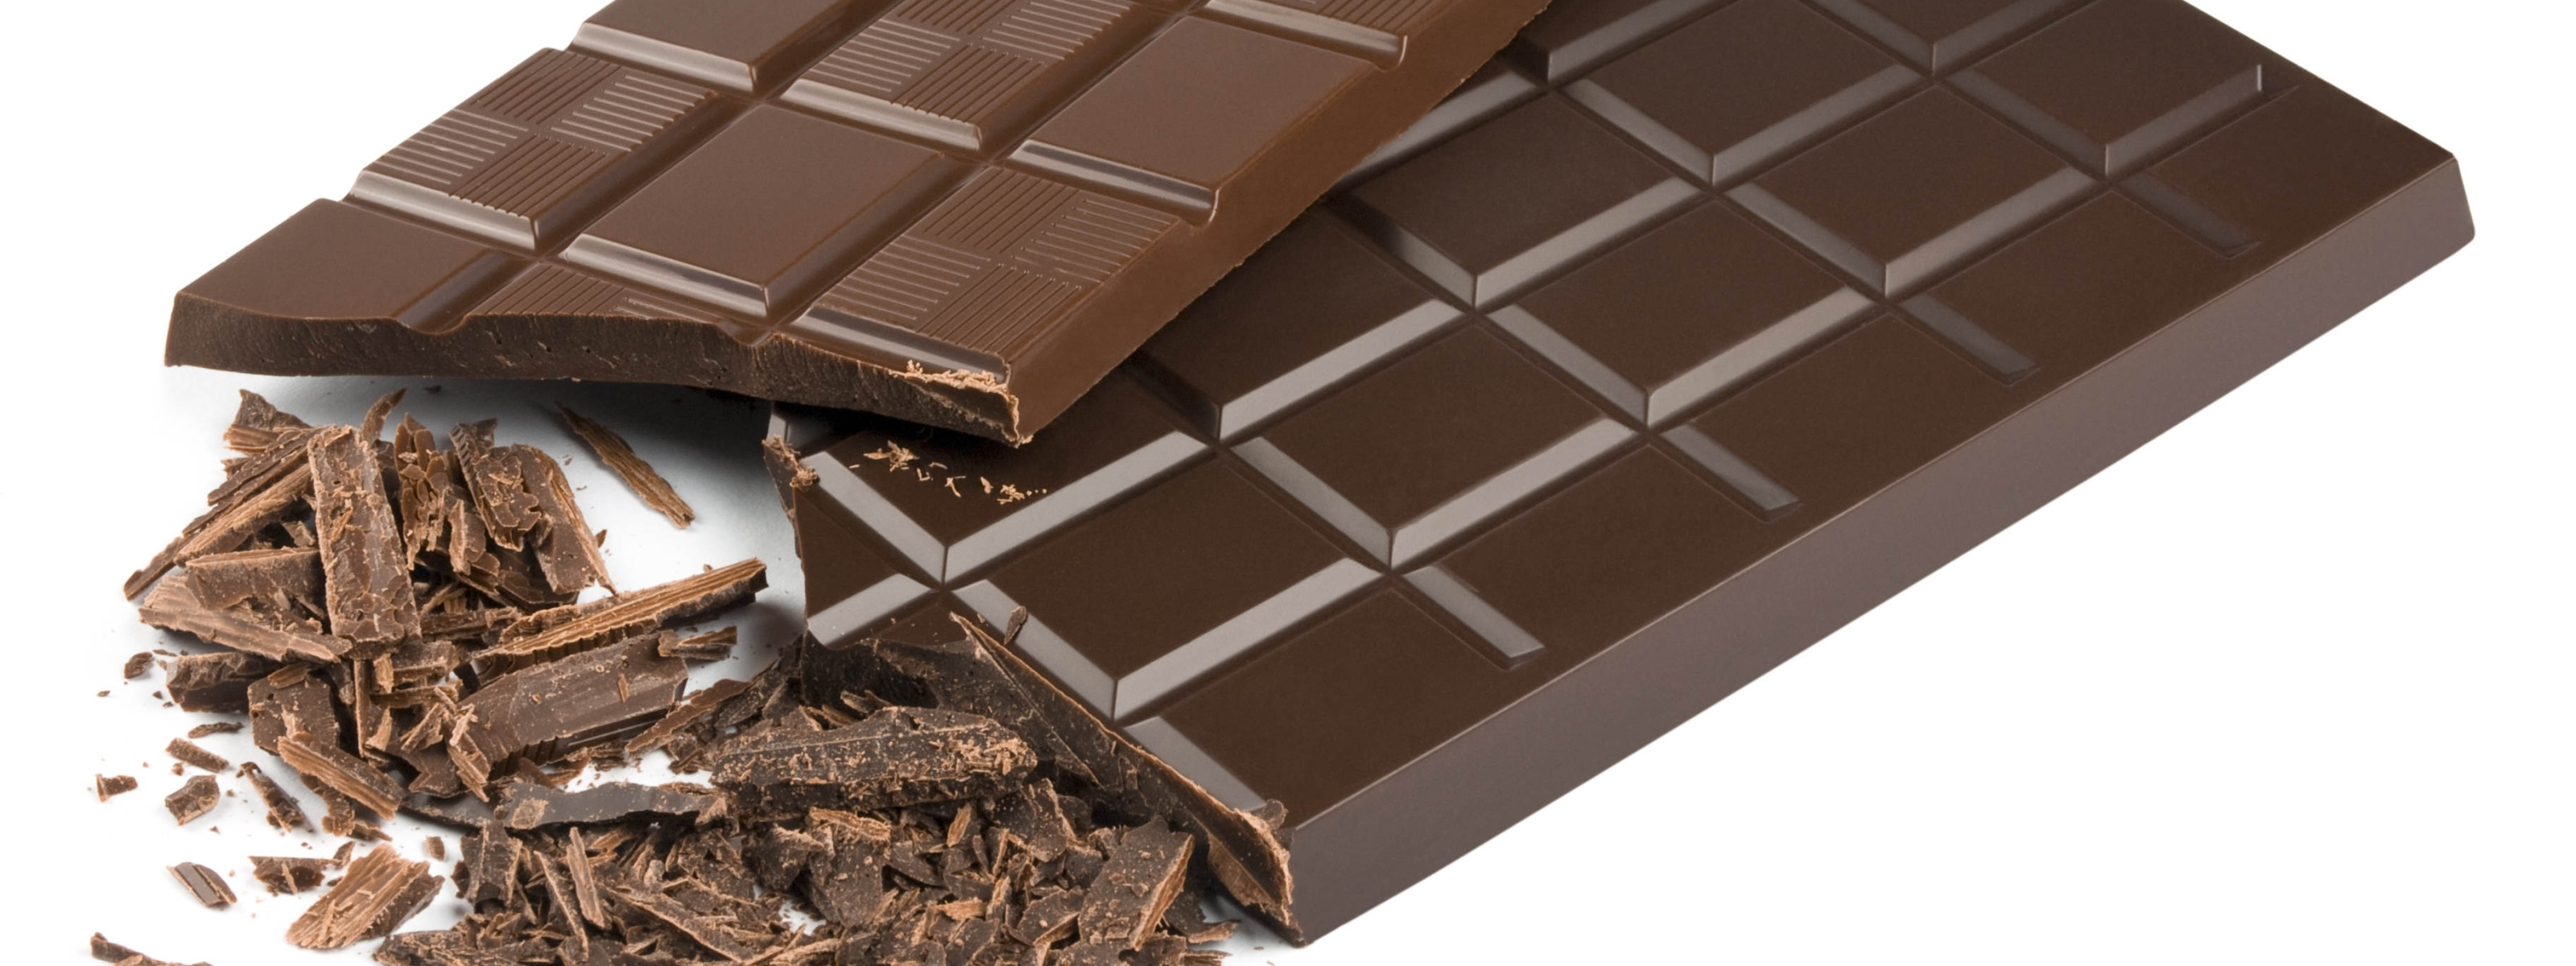 Шоколад продукт. Плитка шоколада. Шоколадная плитка. Молочный шоколад плитка. Кусочки шоколада.